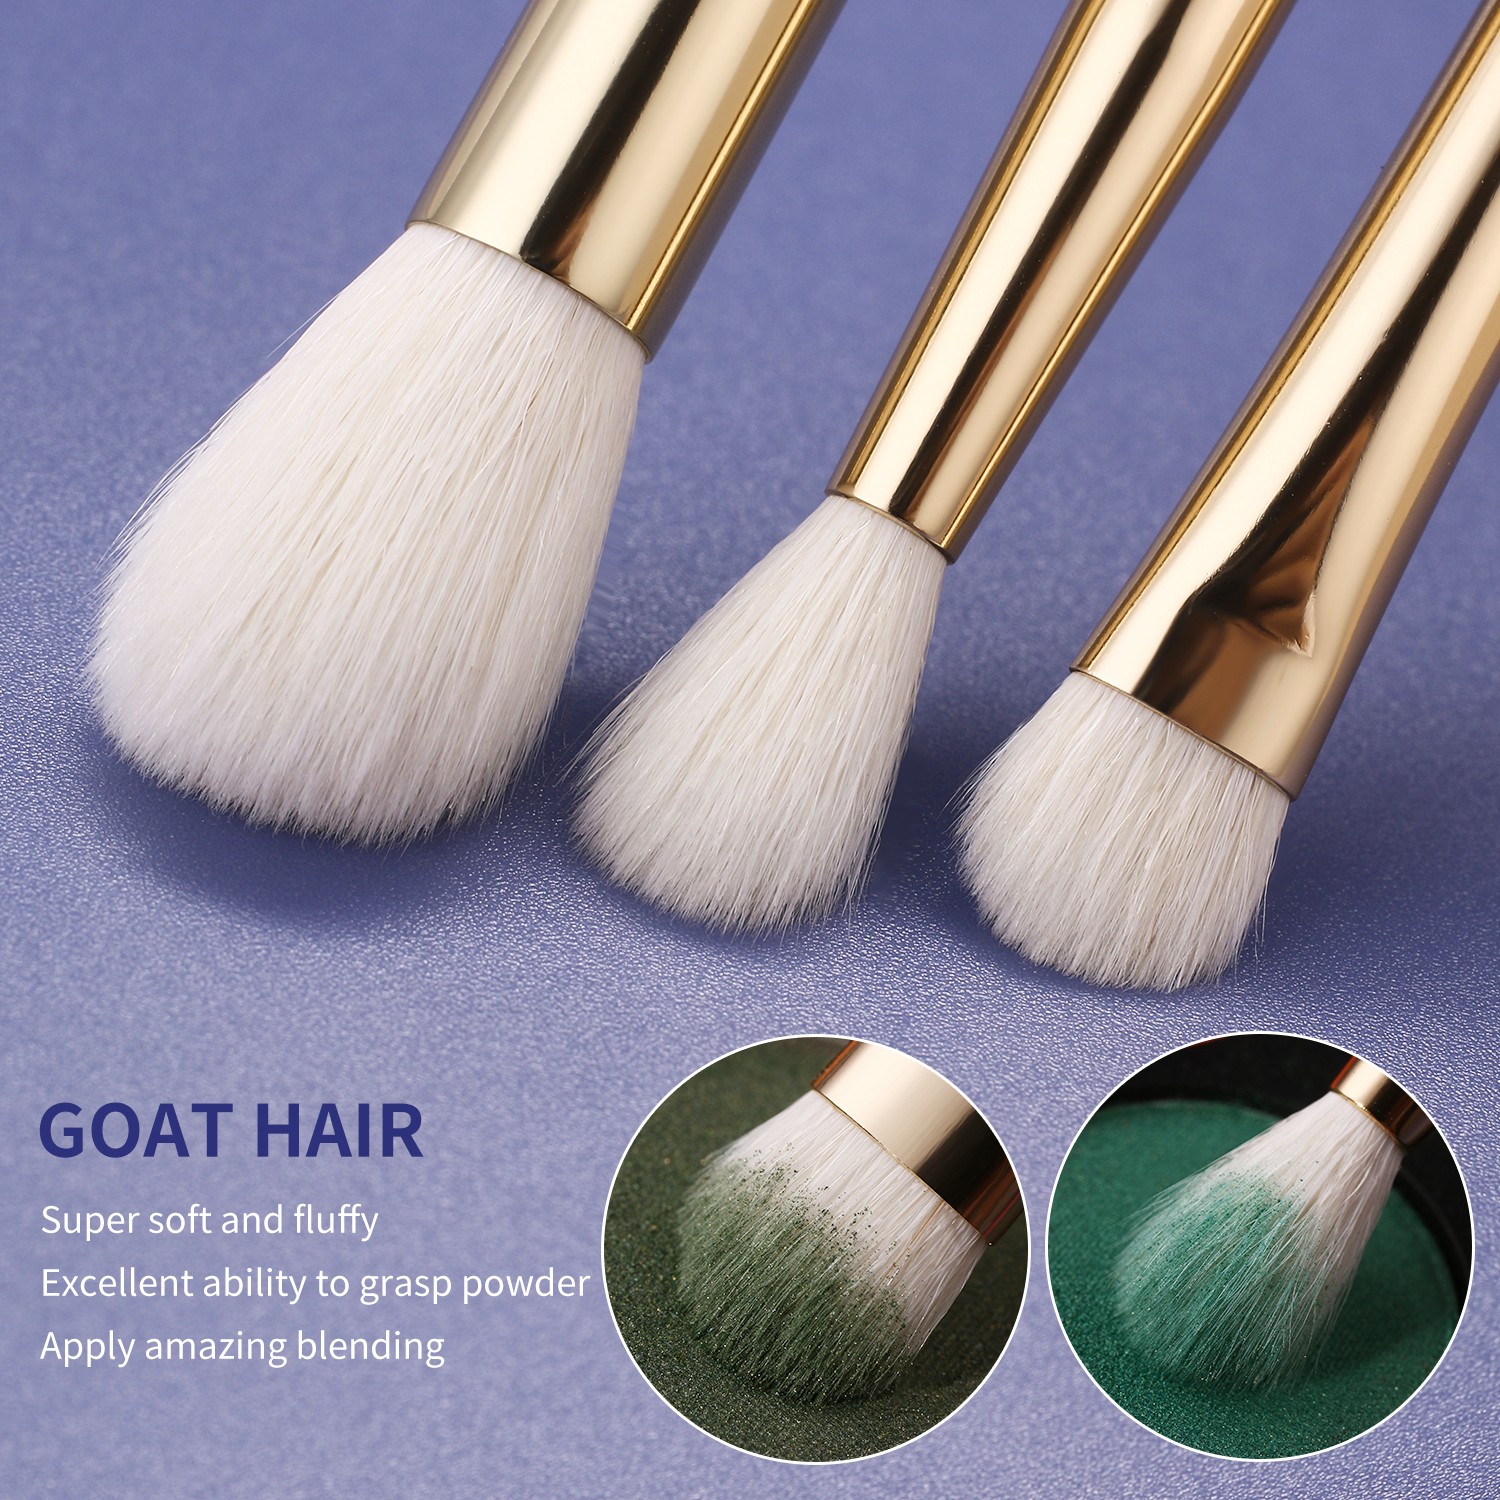 goat hair makeup brushes